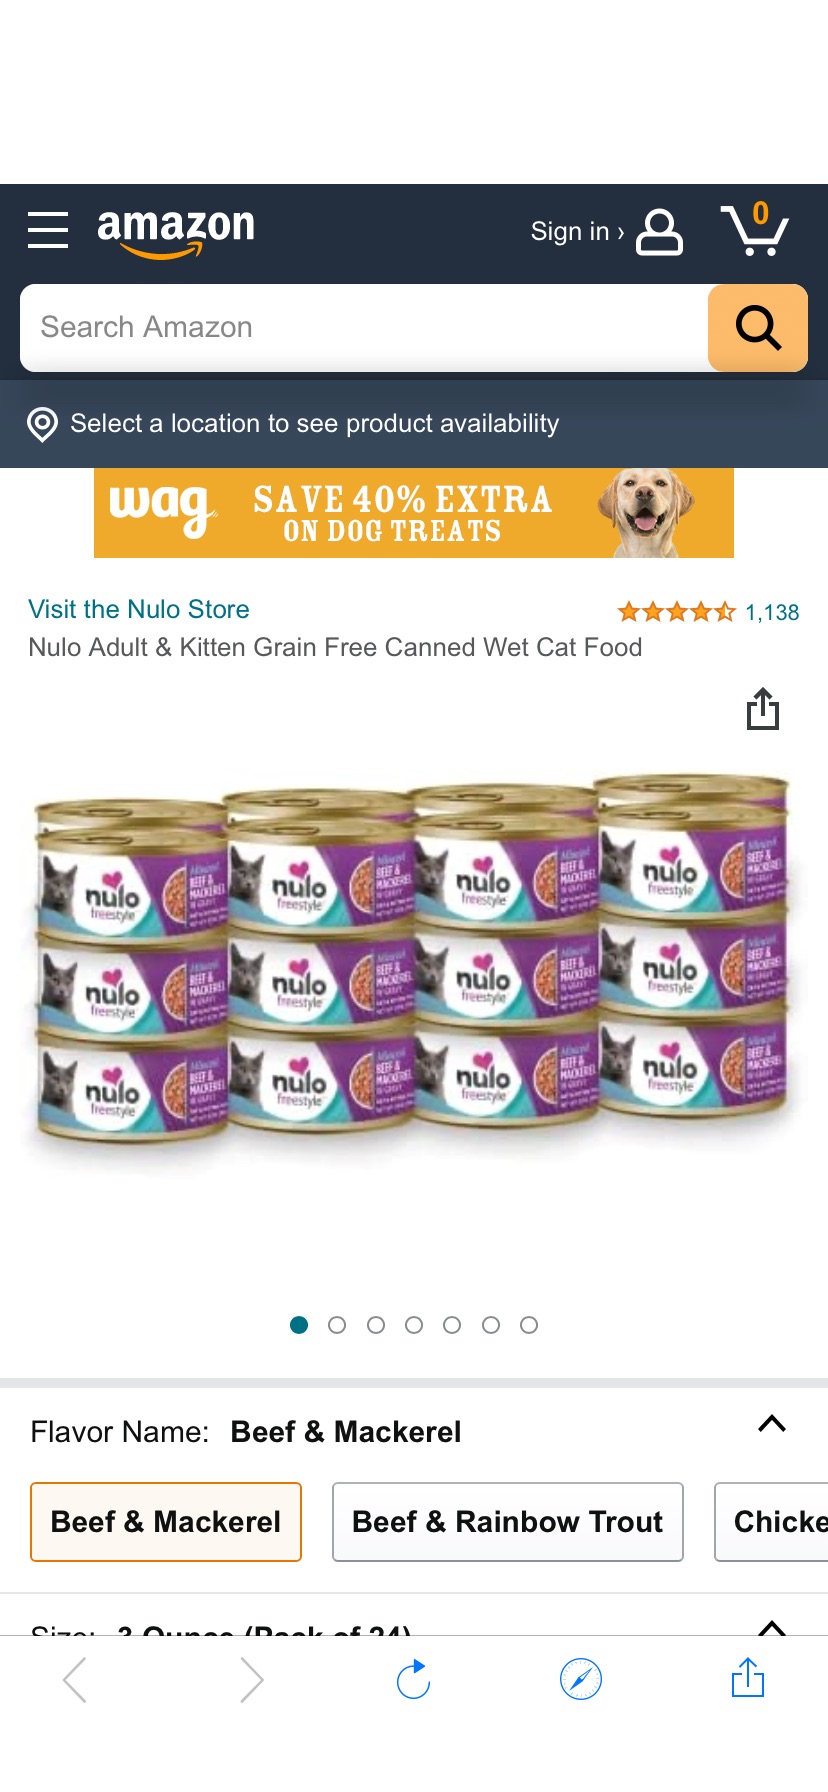 Amazon.com : Nulo Adult & Kitten Grain Free Canned Wet Cat Food (Beef & Mackerel Recipe, 3 Oz, Case of 24) : Pet Supplies